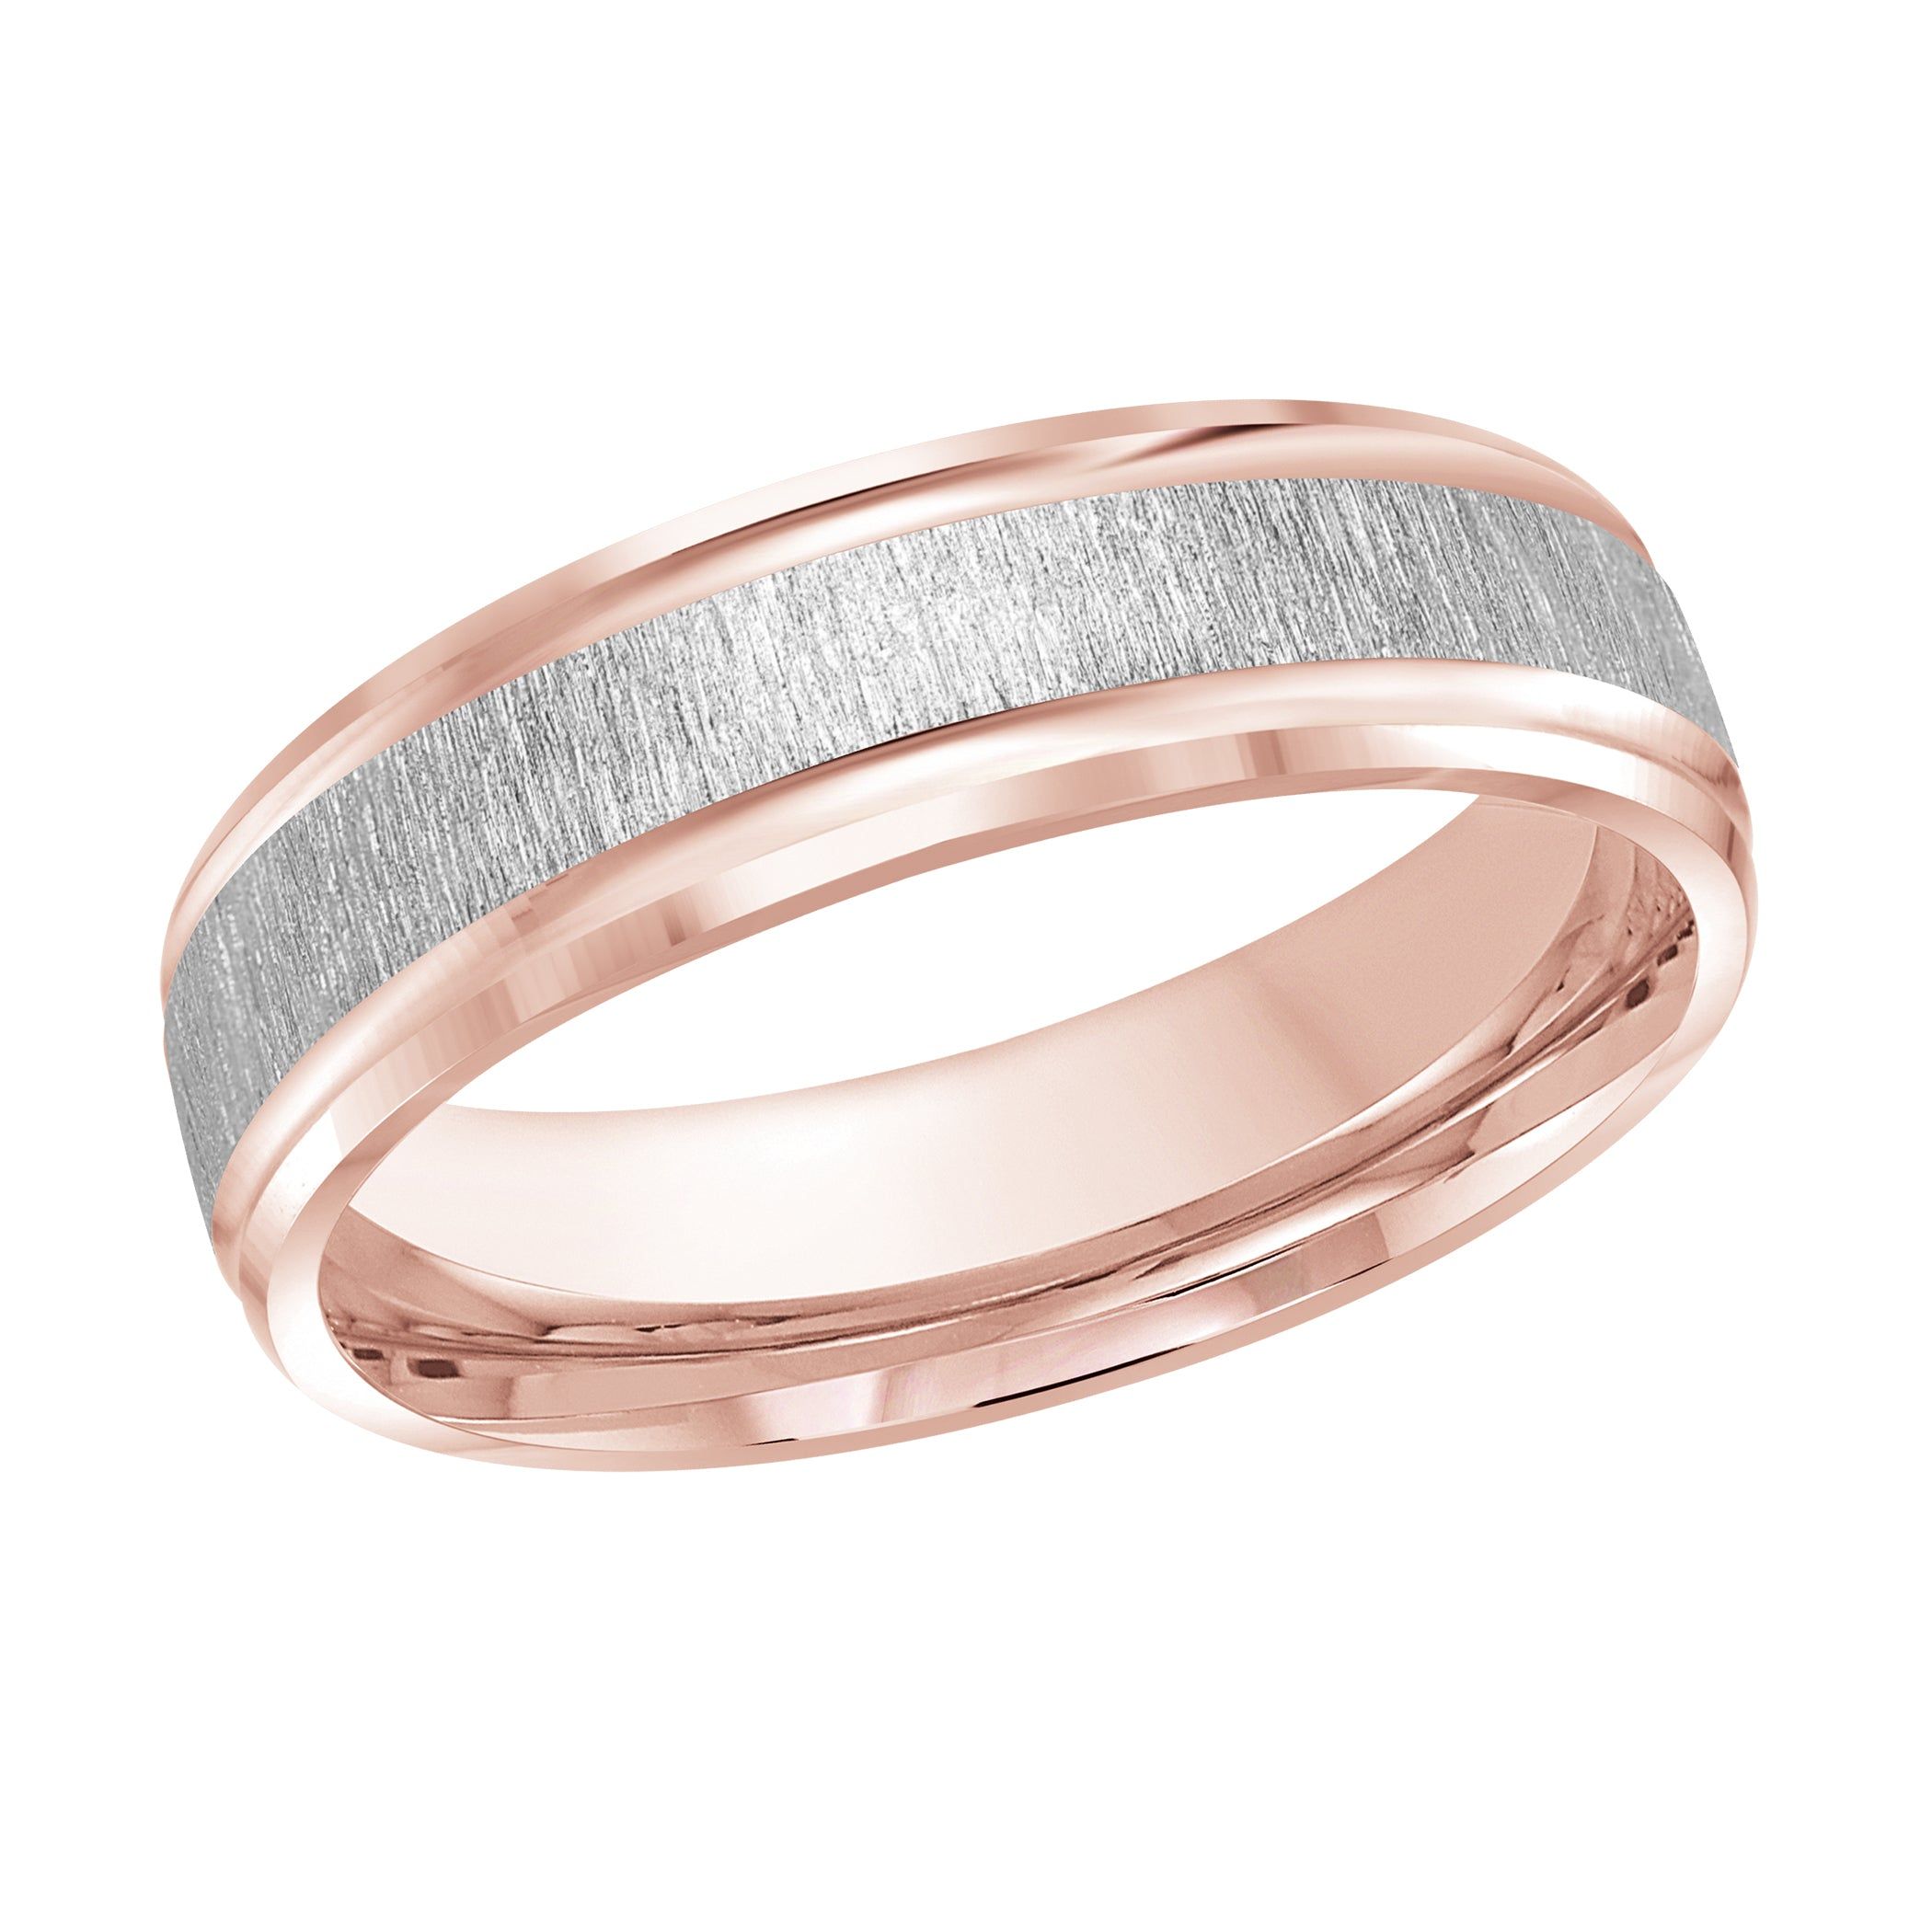 Men's 6mm Two-tone Sandpaper-finish Beveled Edge Wedding Ring